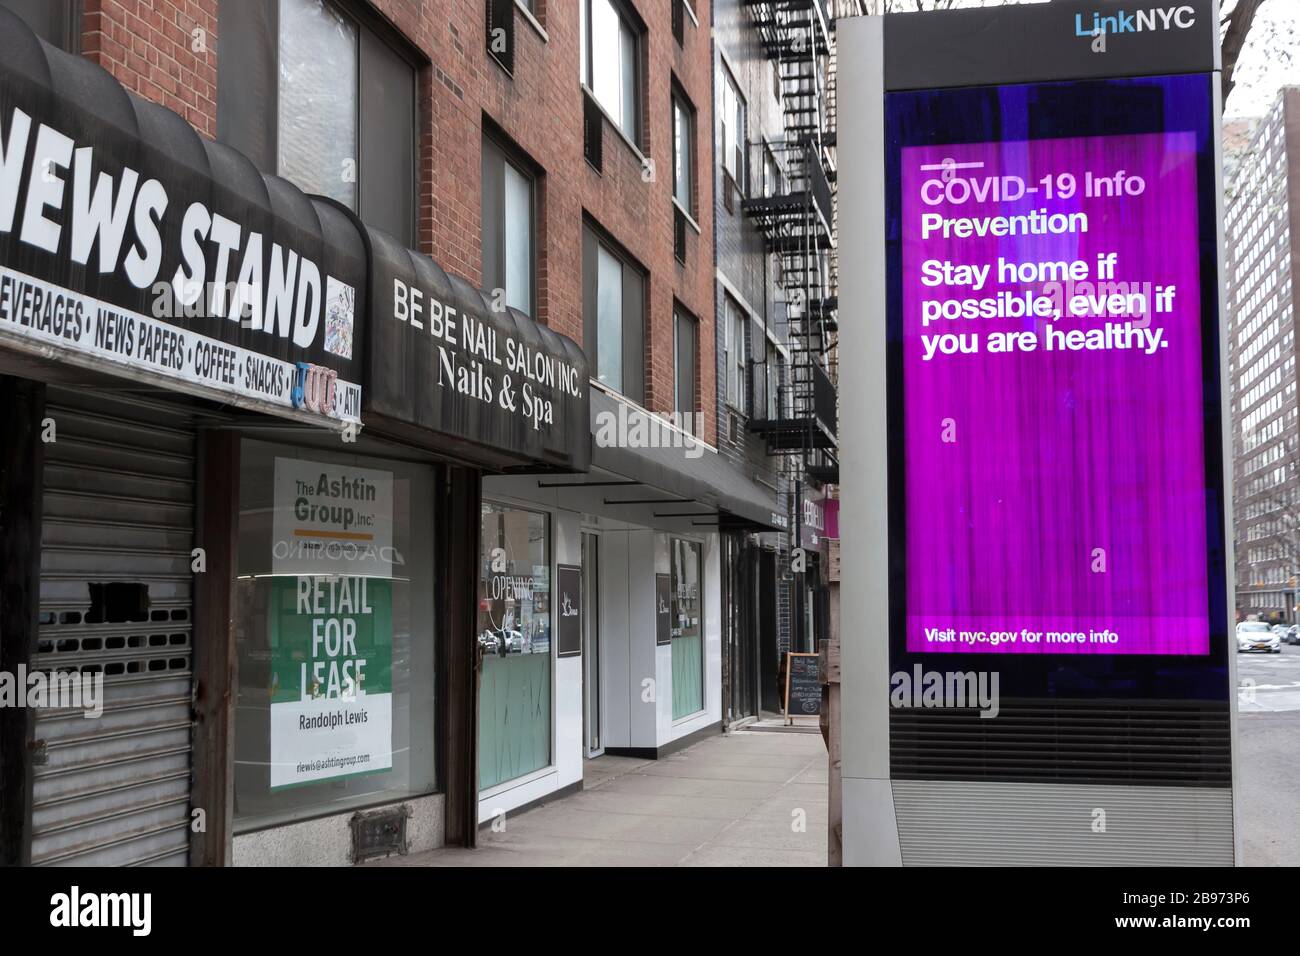 LinkNYC digital kiosk sign on sidewalk displaying Covid-19 (coronavirus) messages and advice on quarantine to New Yorkers. Stock Photo